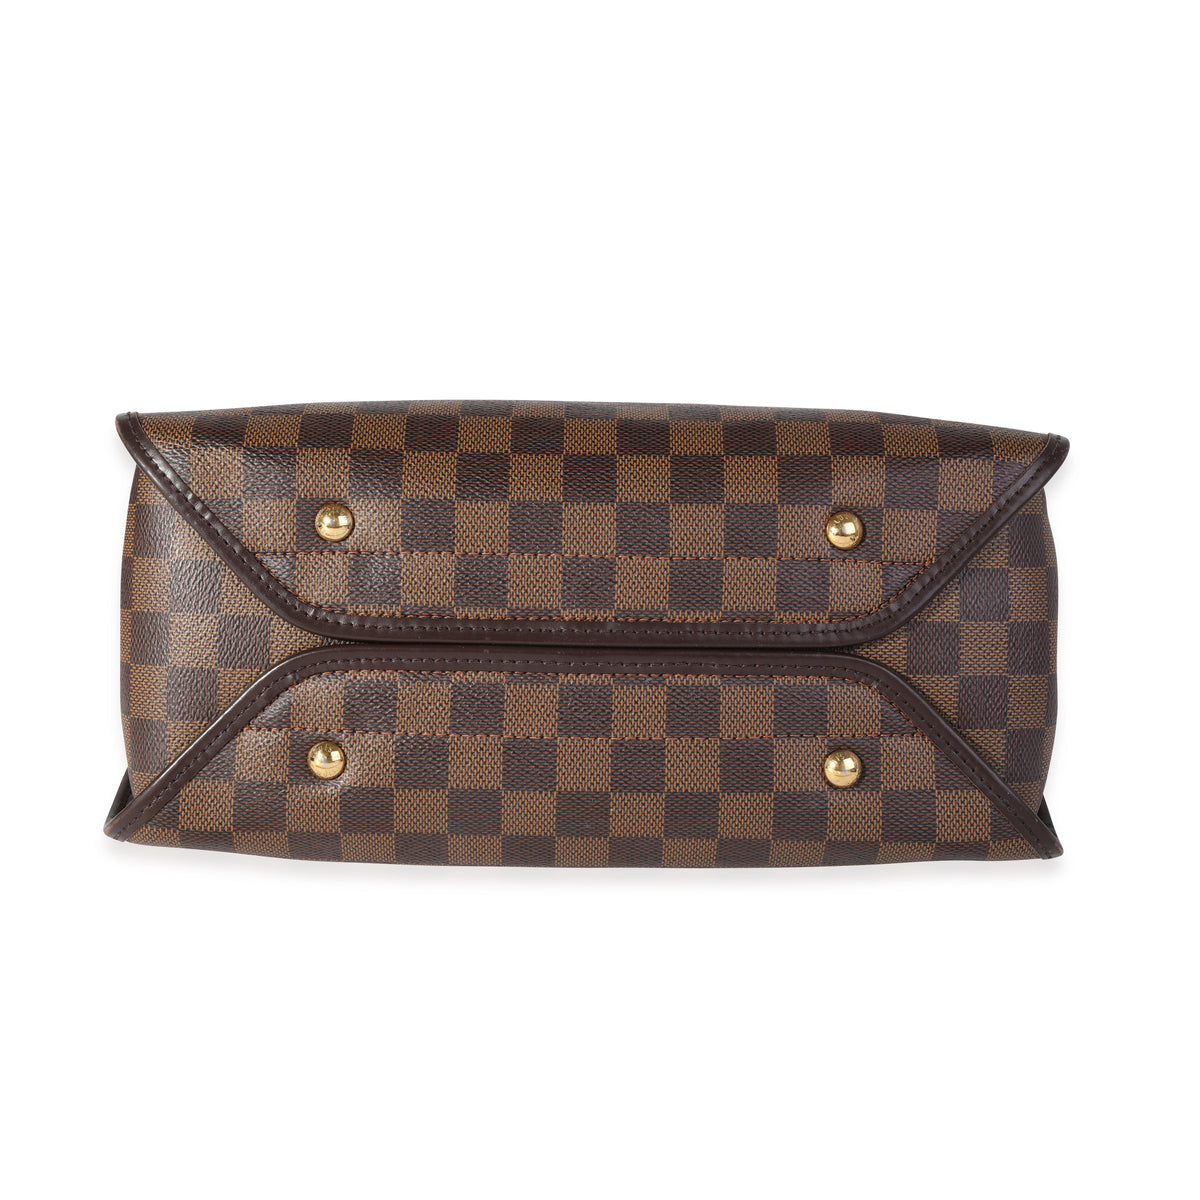 Louis Vuitton - Authenticated Duomo Handbag - Leather Brown Plain for Women, Good Condition